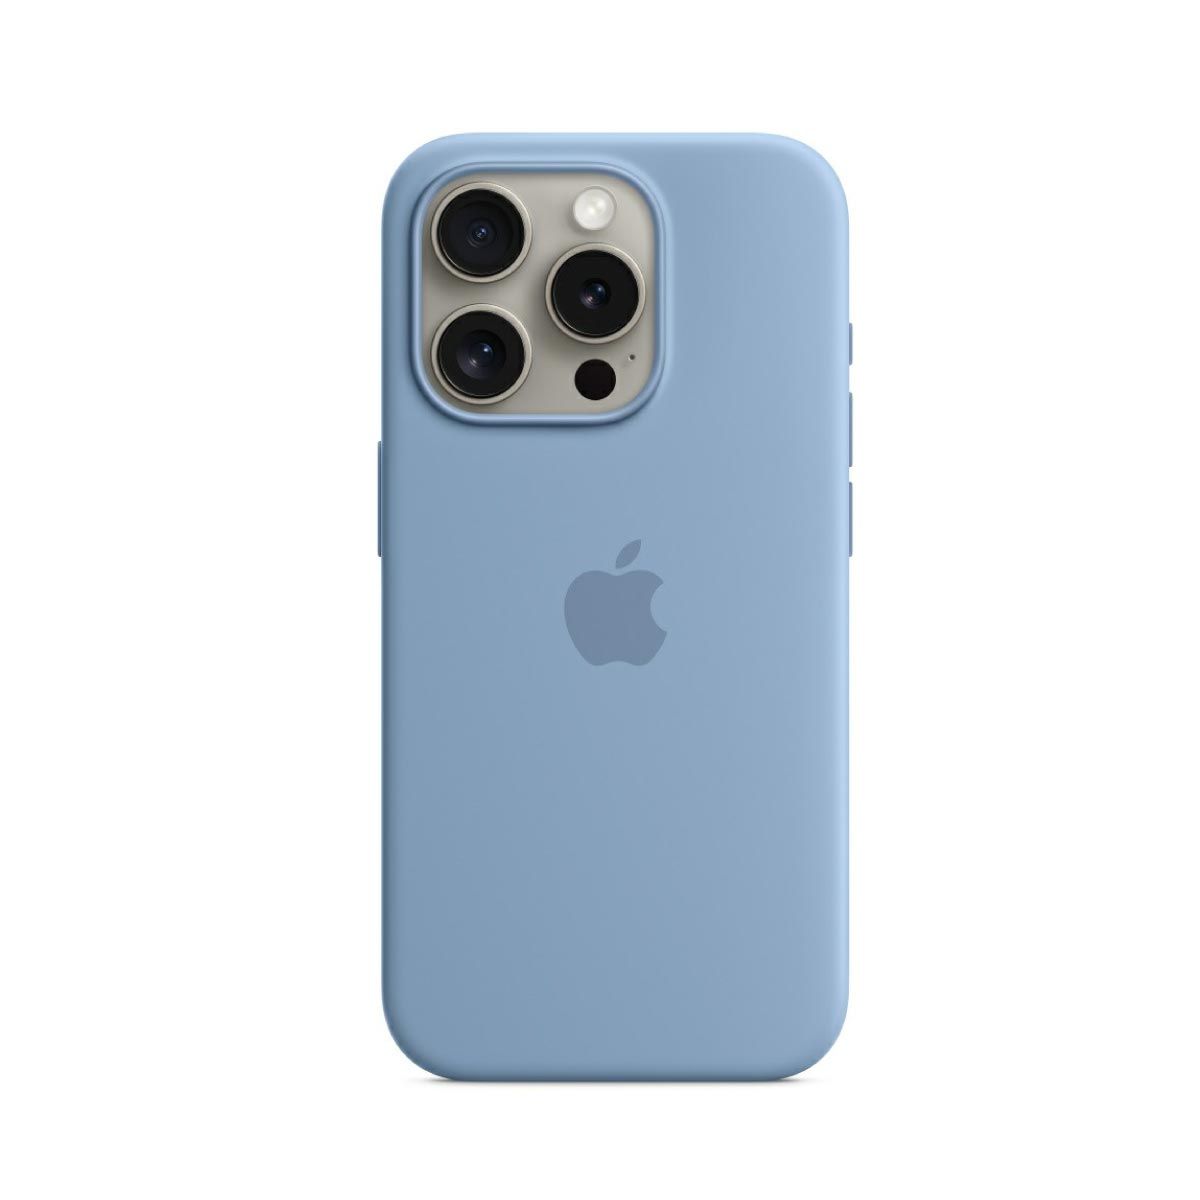 Apple Case เคสซิลิโคนสำหรับ iPhone 15 Pro พร้อม MagSafe -สีฟ้าวินเทอร์